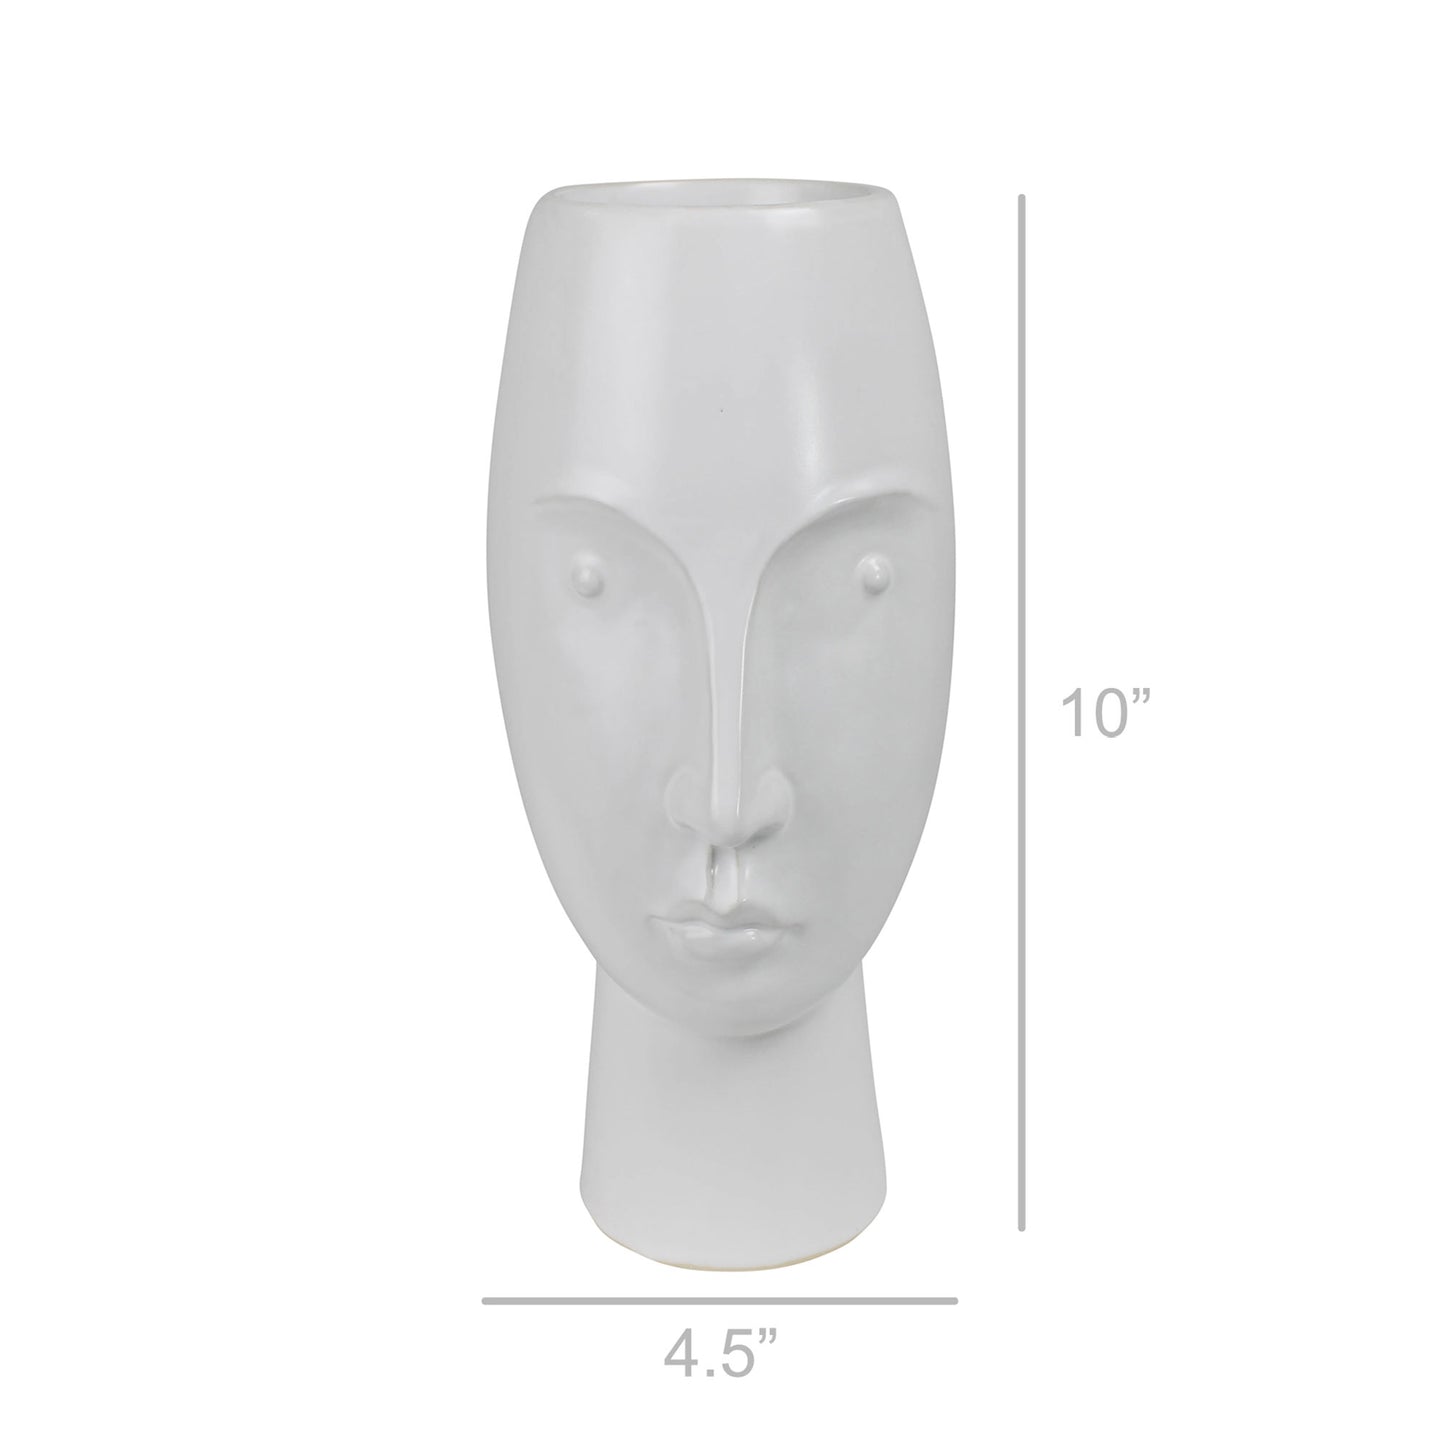 Larry Face Vase